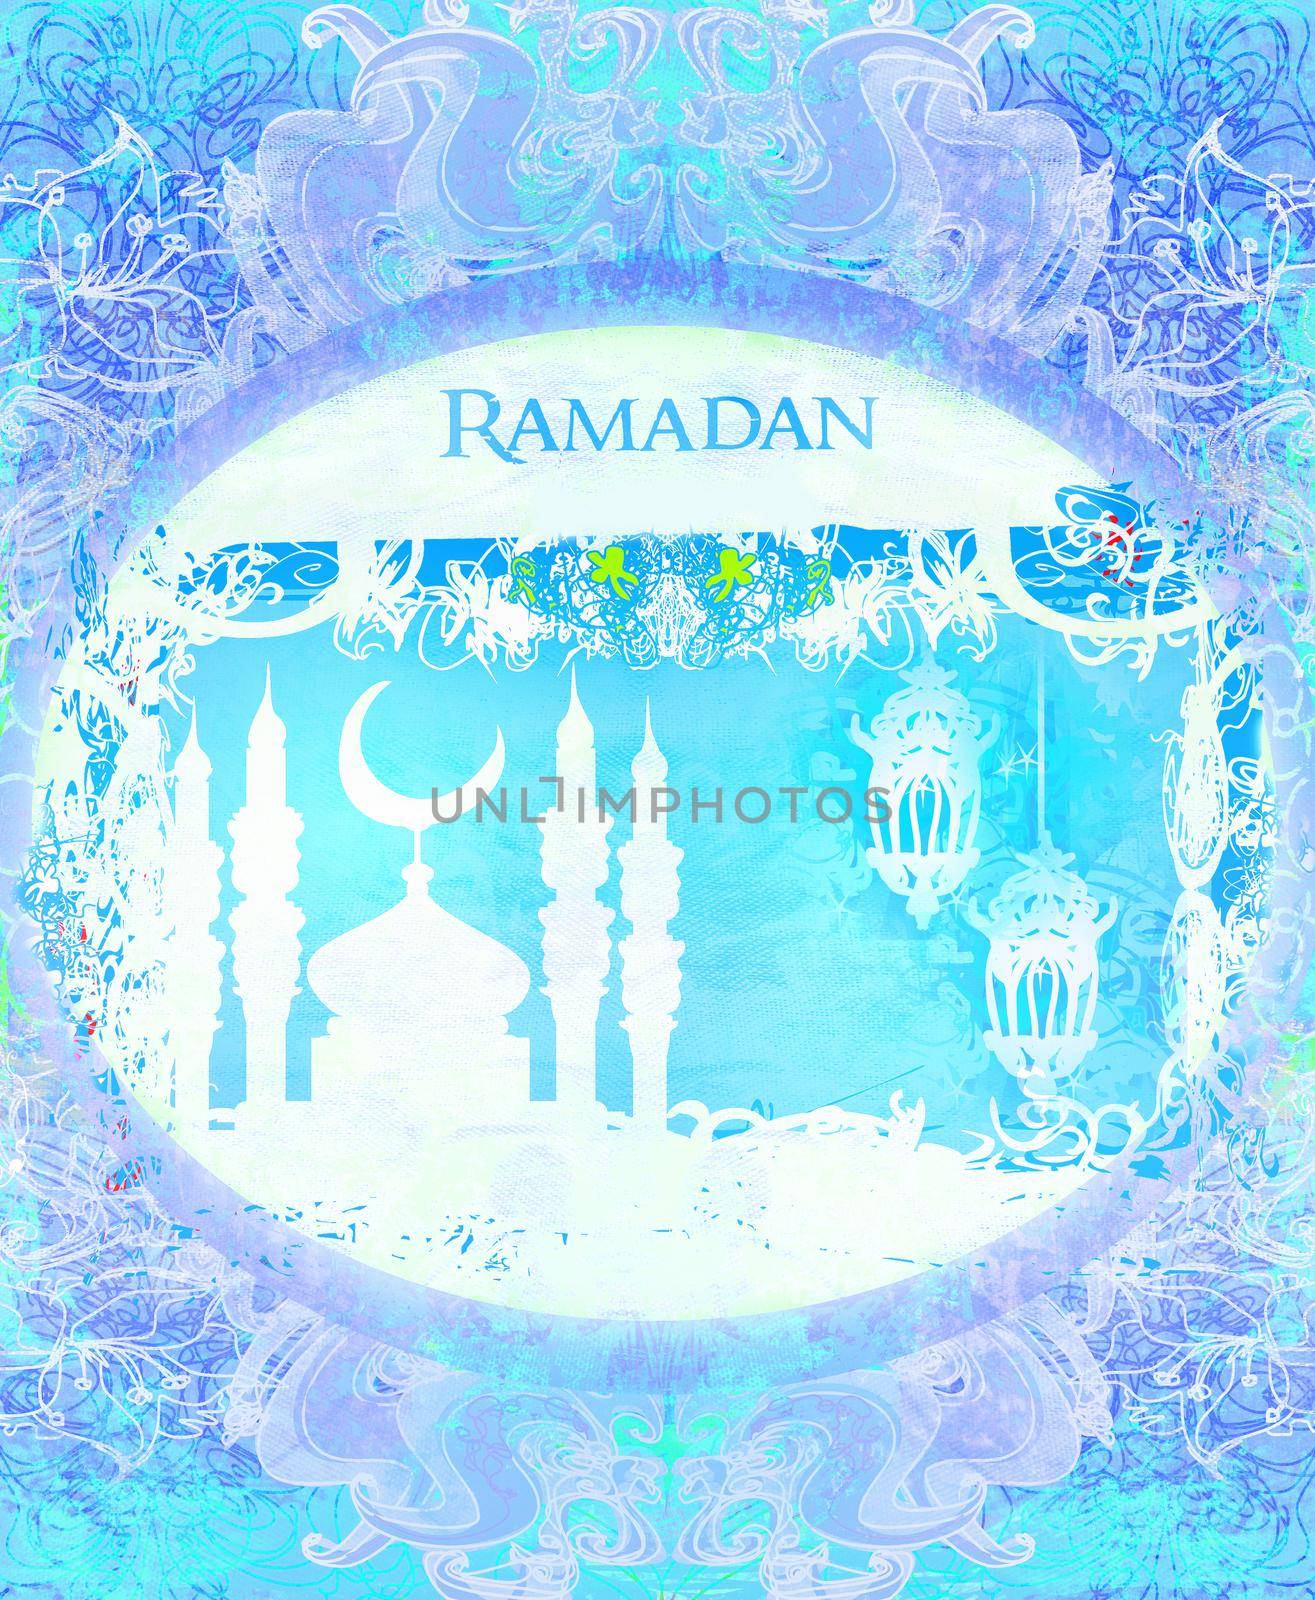 Ramadan Kareem Design by JackyBrown